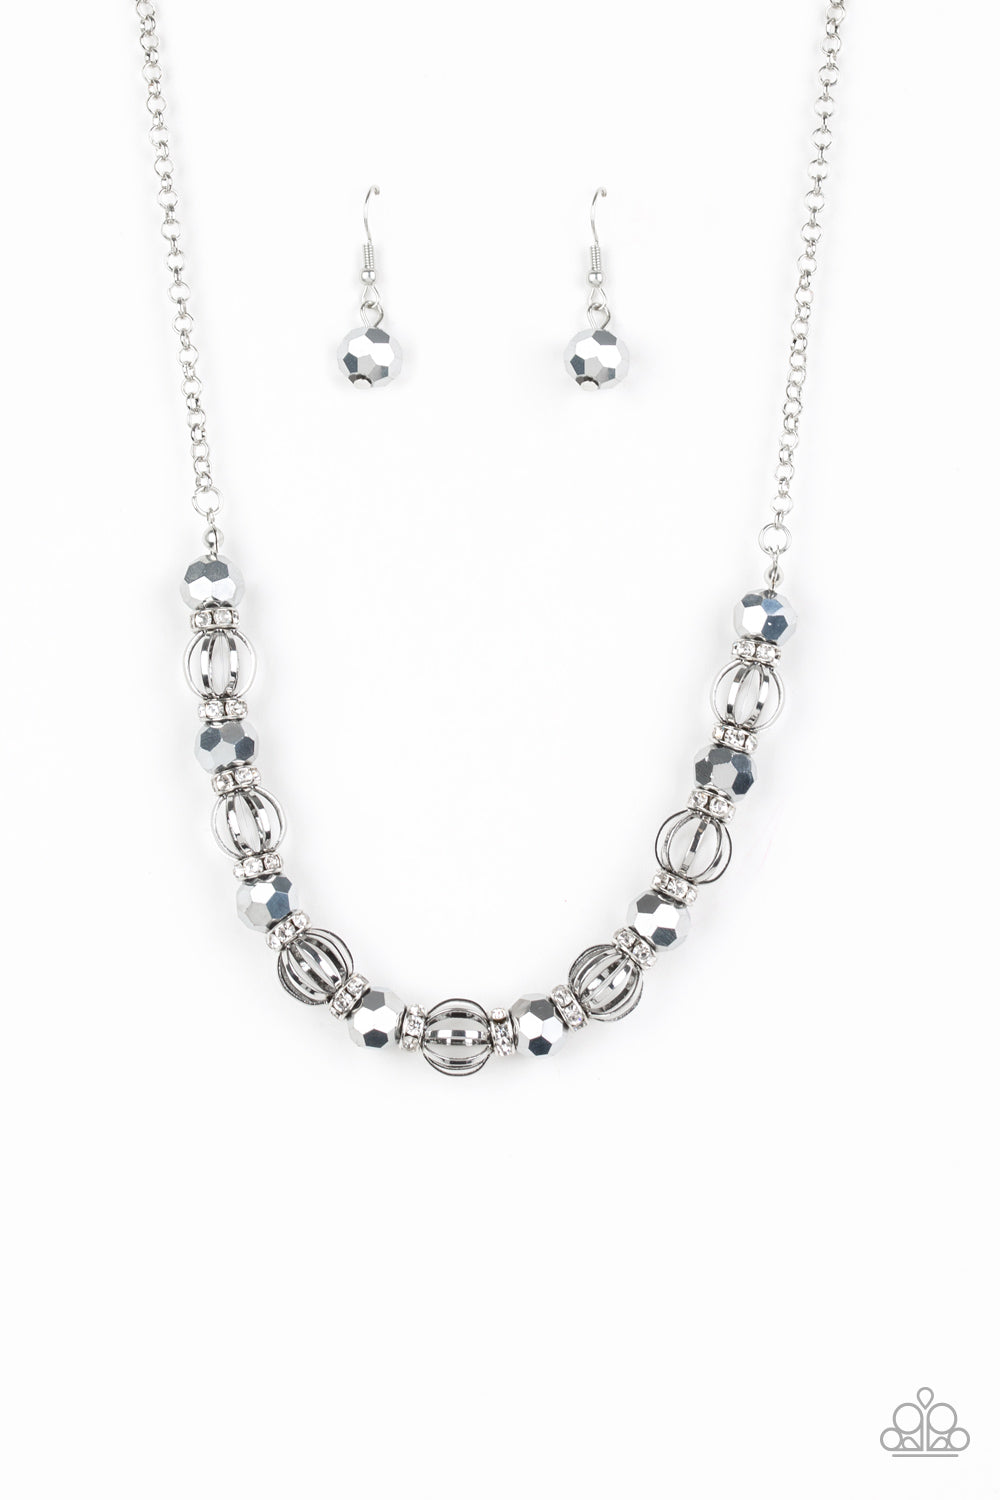 Metro Majestic - Silver Necklace Earring Jewelry Set 2650